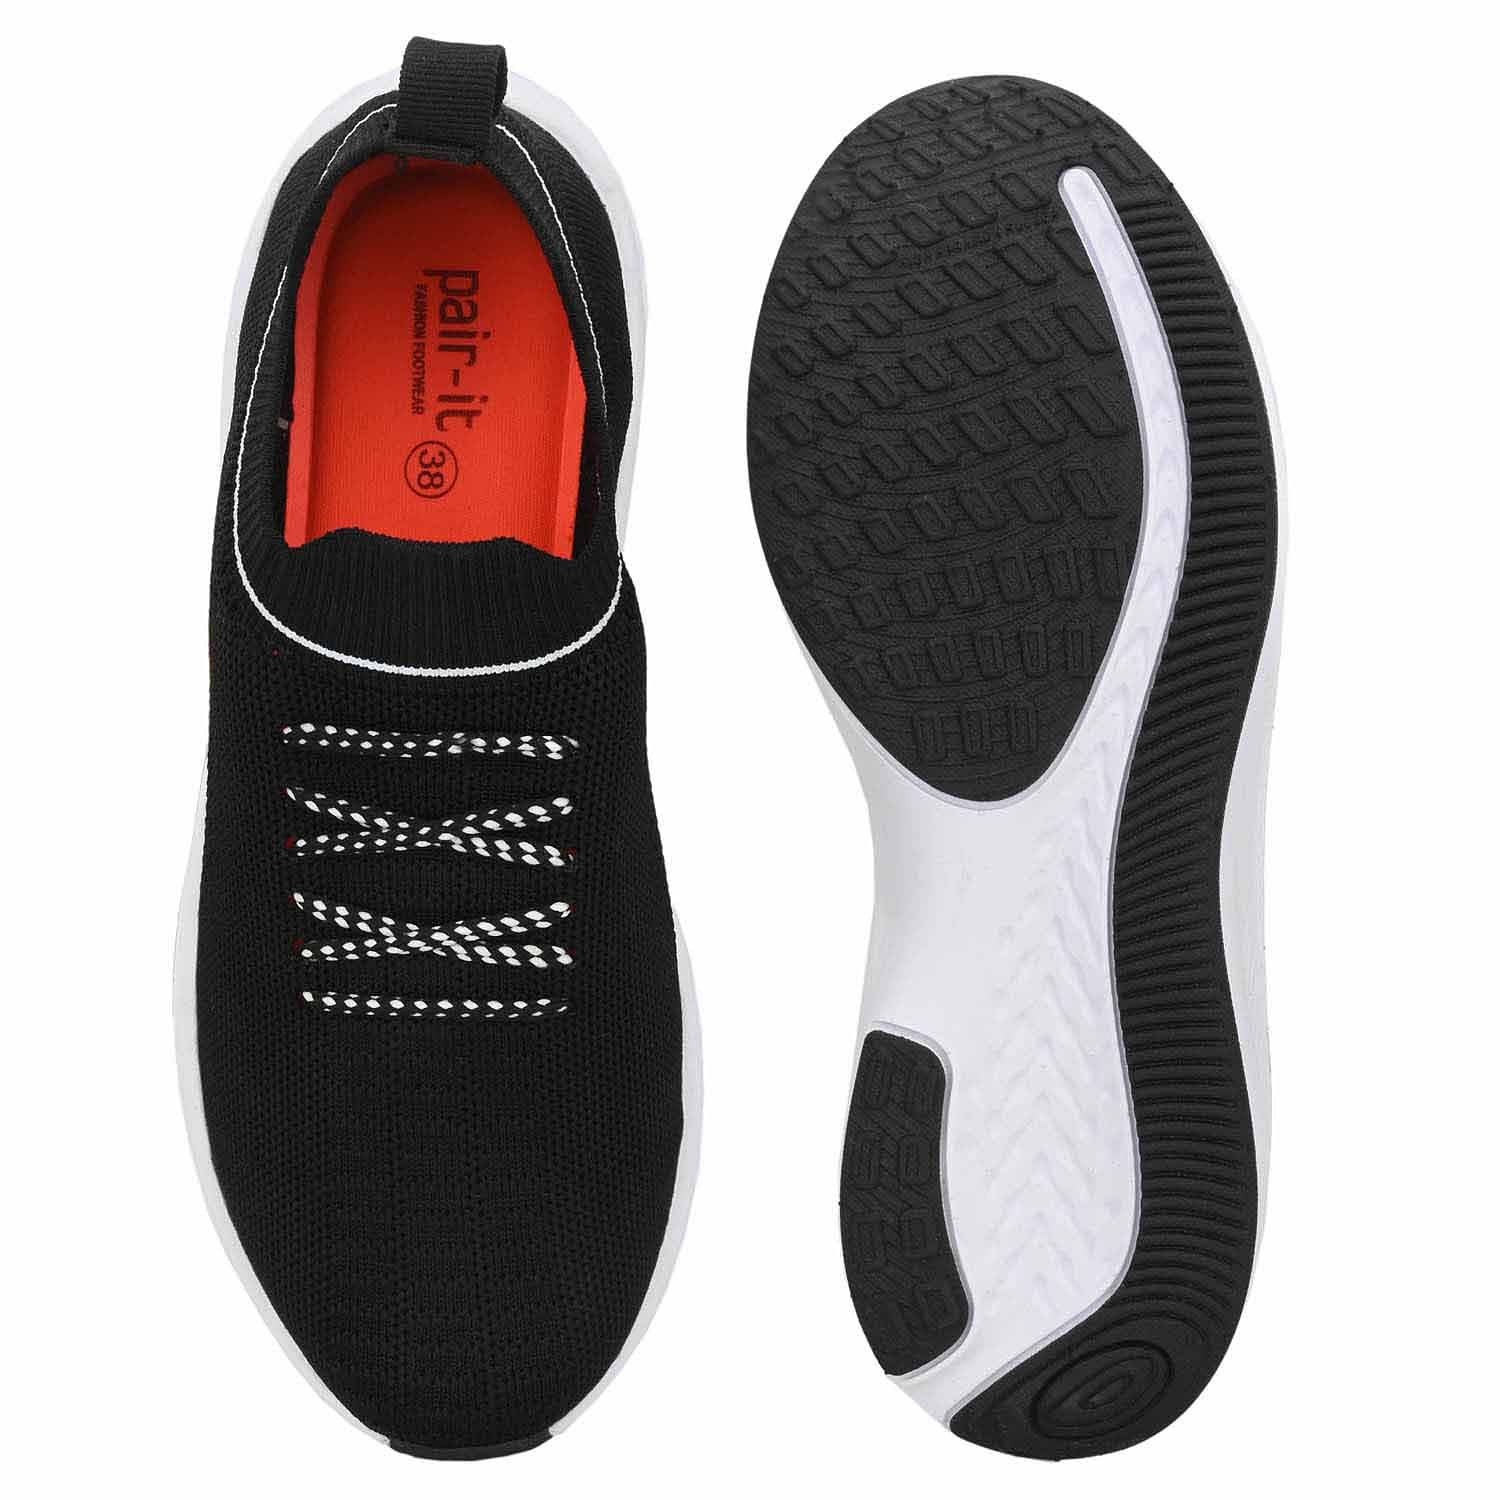 Pair-it Women's Sports Shoes-LZ-WMN SPORTS-004-Black